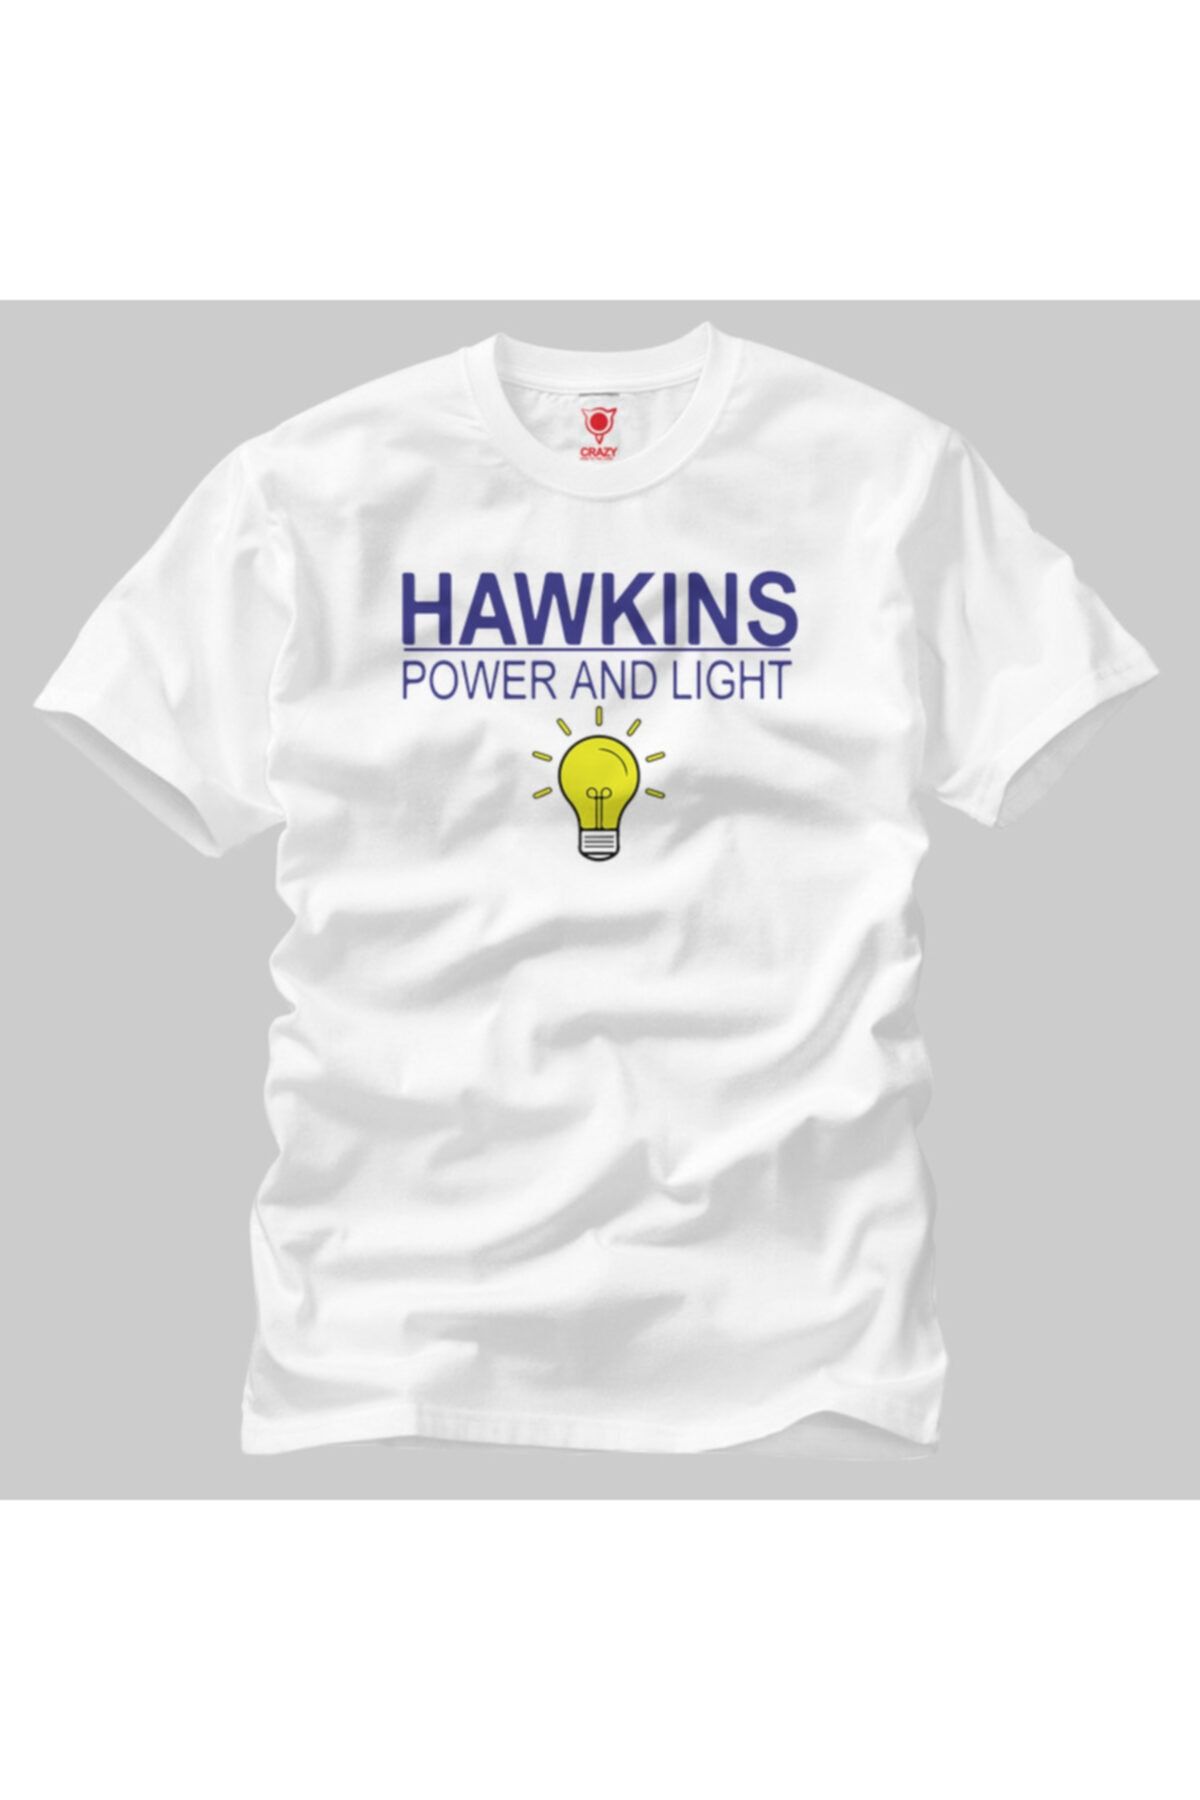 Crazy Stranger Things Hawkins Power And Light Erkek Tişört